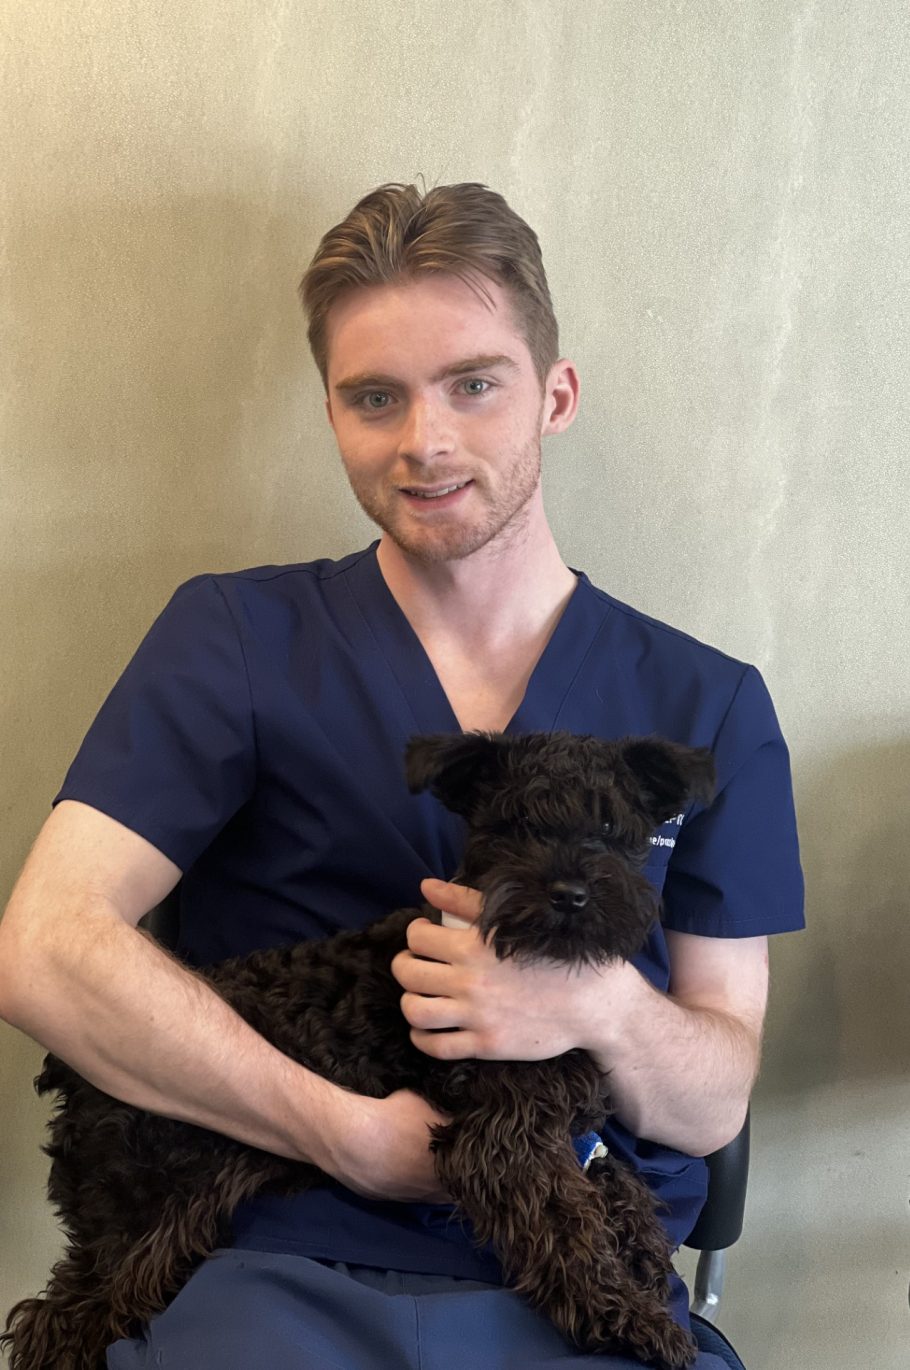 Brendan in the office wearing scrubs holding a dog